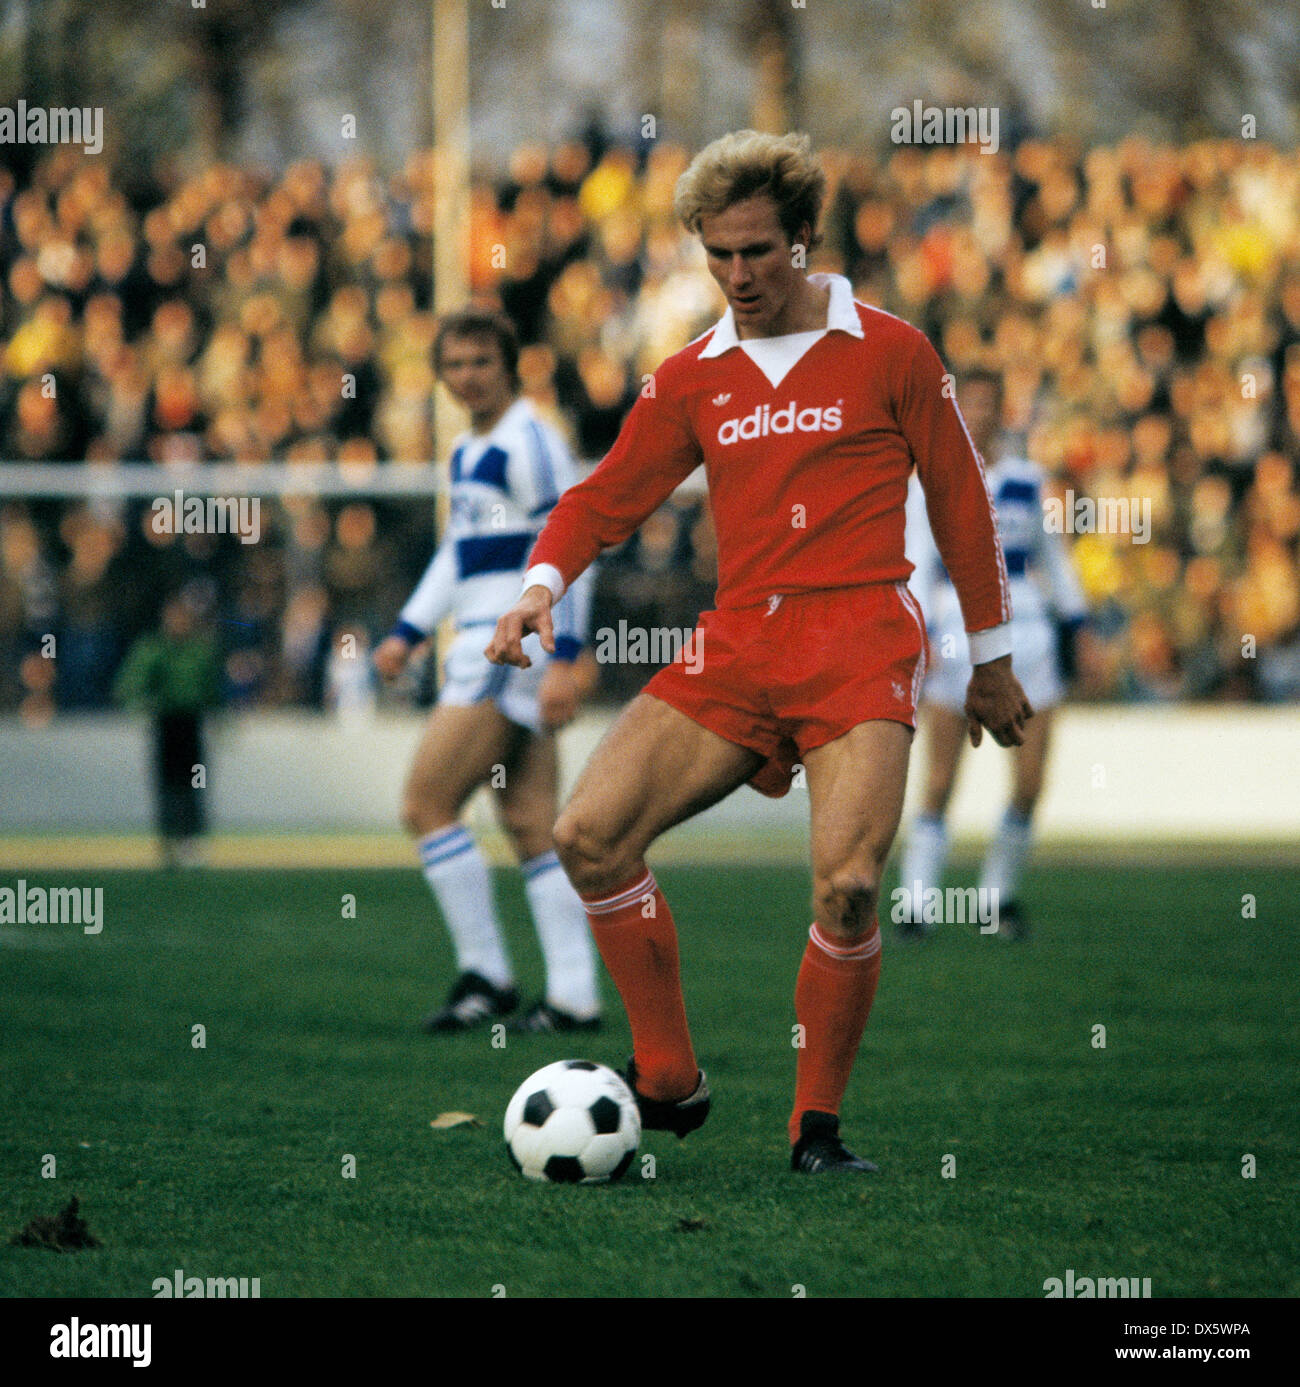 Football, Bundesliga, 1977/1978, stade MSV Duisburg Wedau, contre le FC Bayern Munich 6:3, scène du match, Karl-Heinz Rummenigge (FCB) en possession de la balle Banque D'Images